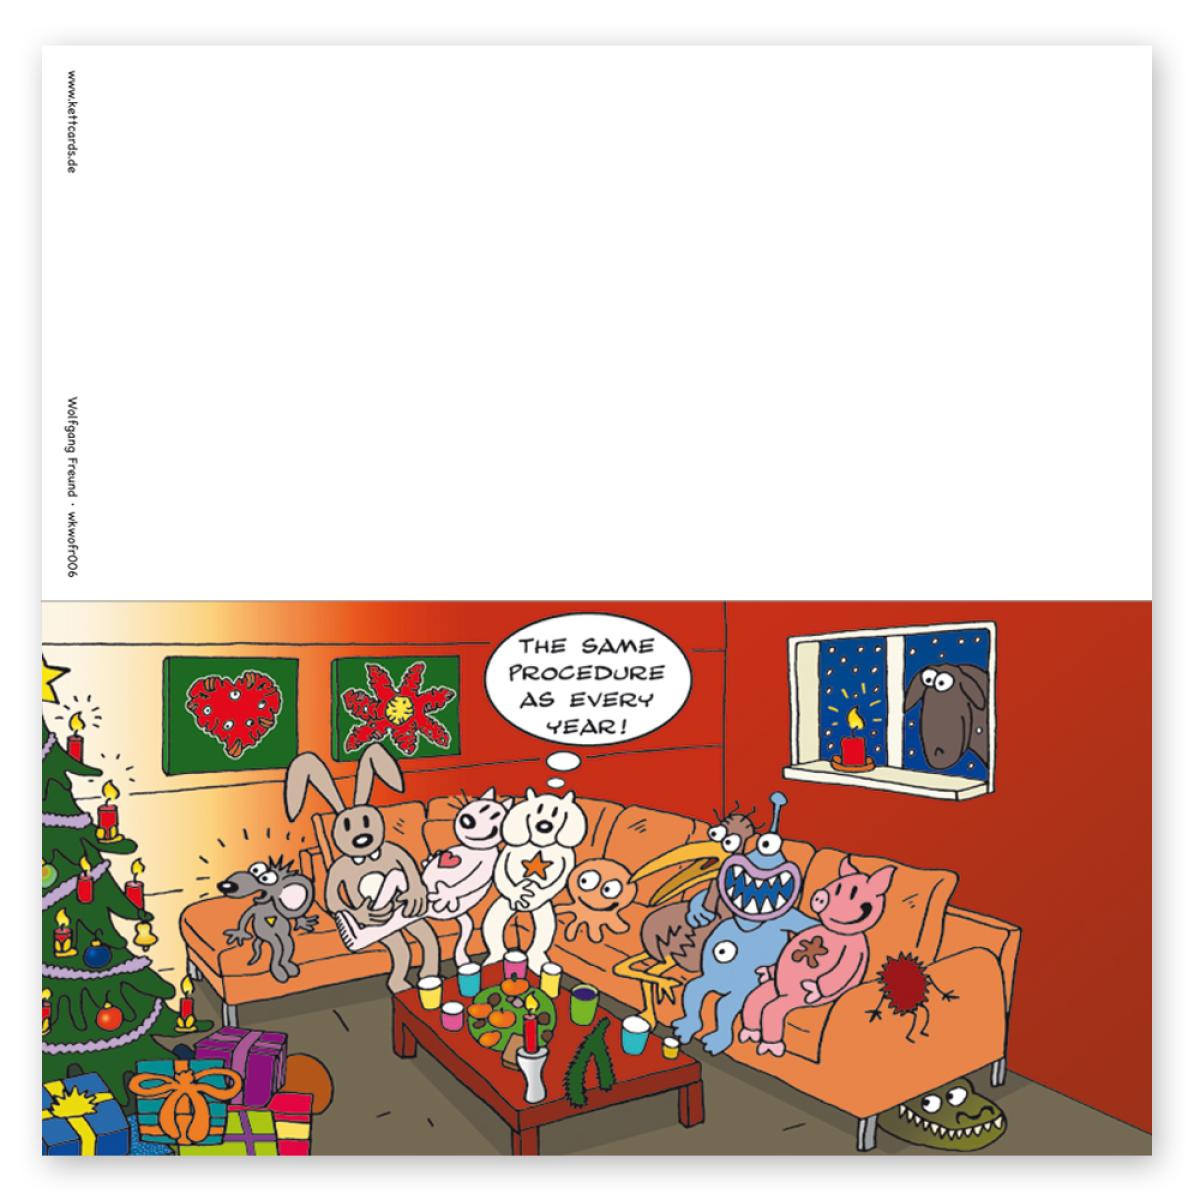 Weihnachtskarte: The same procedure as every year